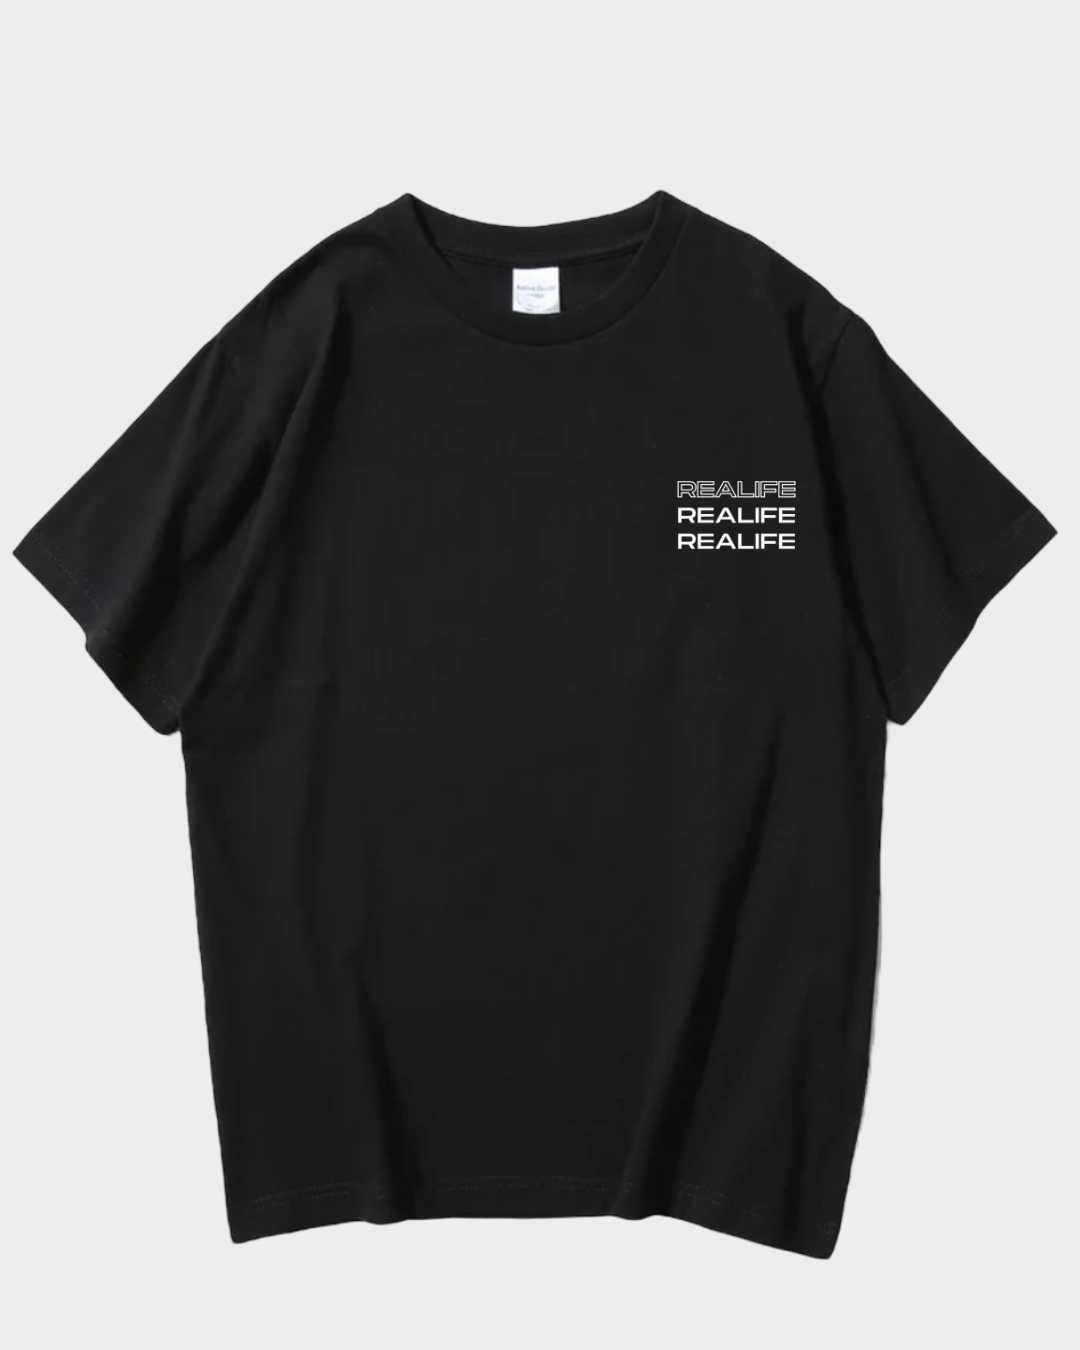 Realife T-shirt, black